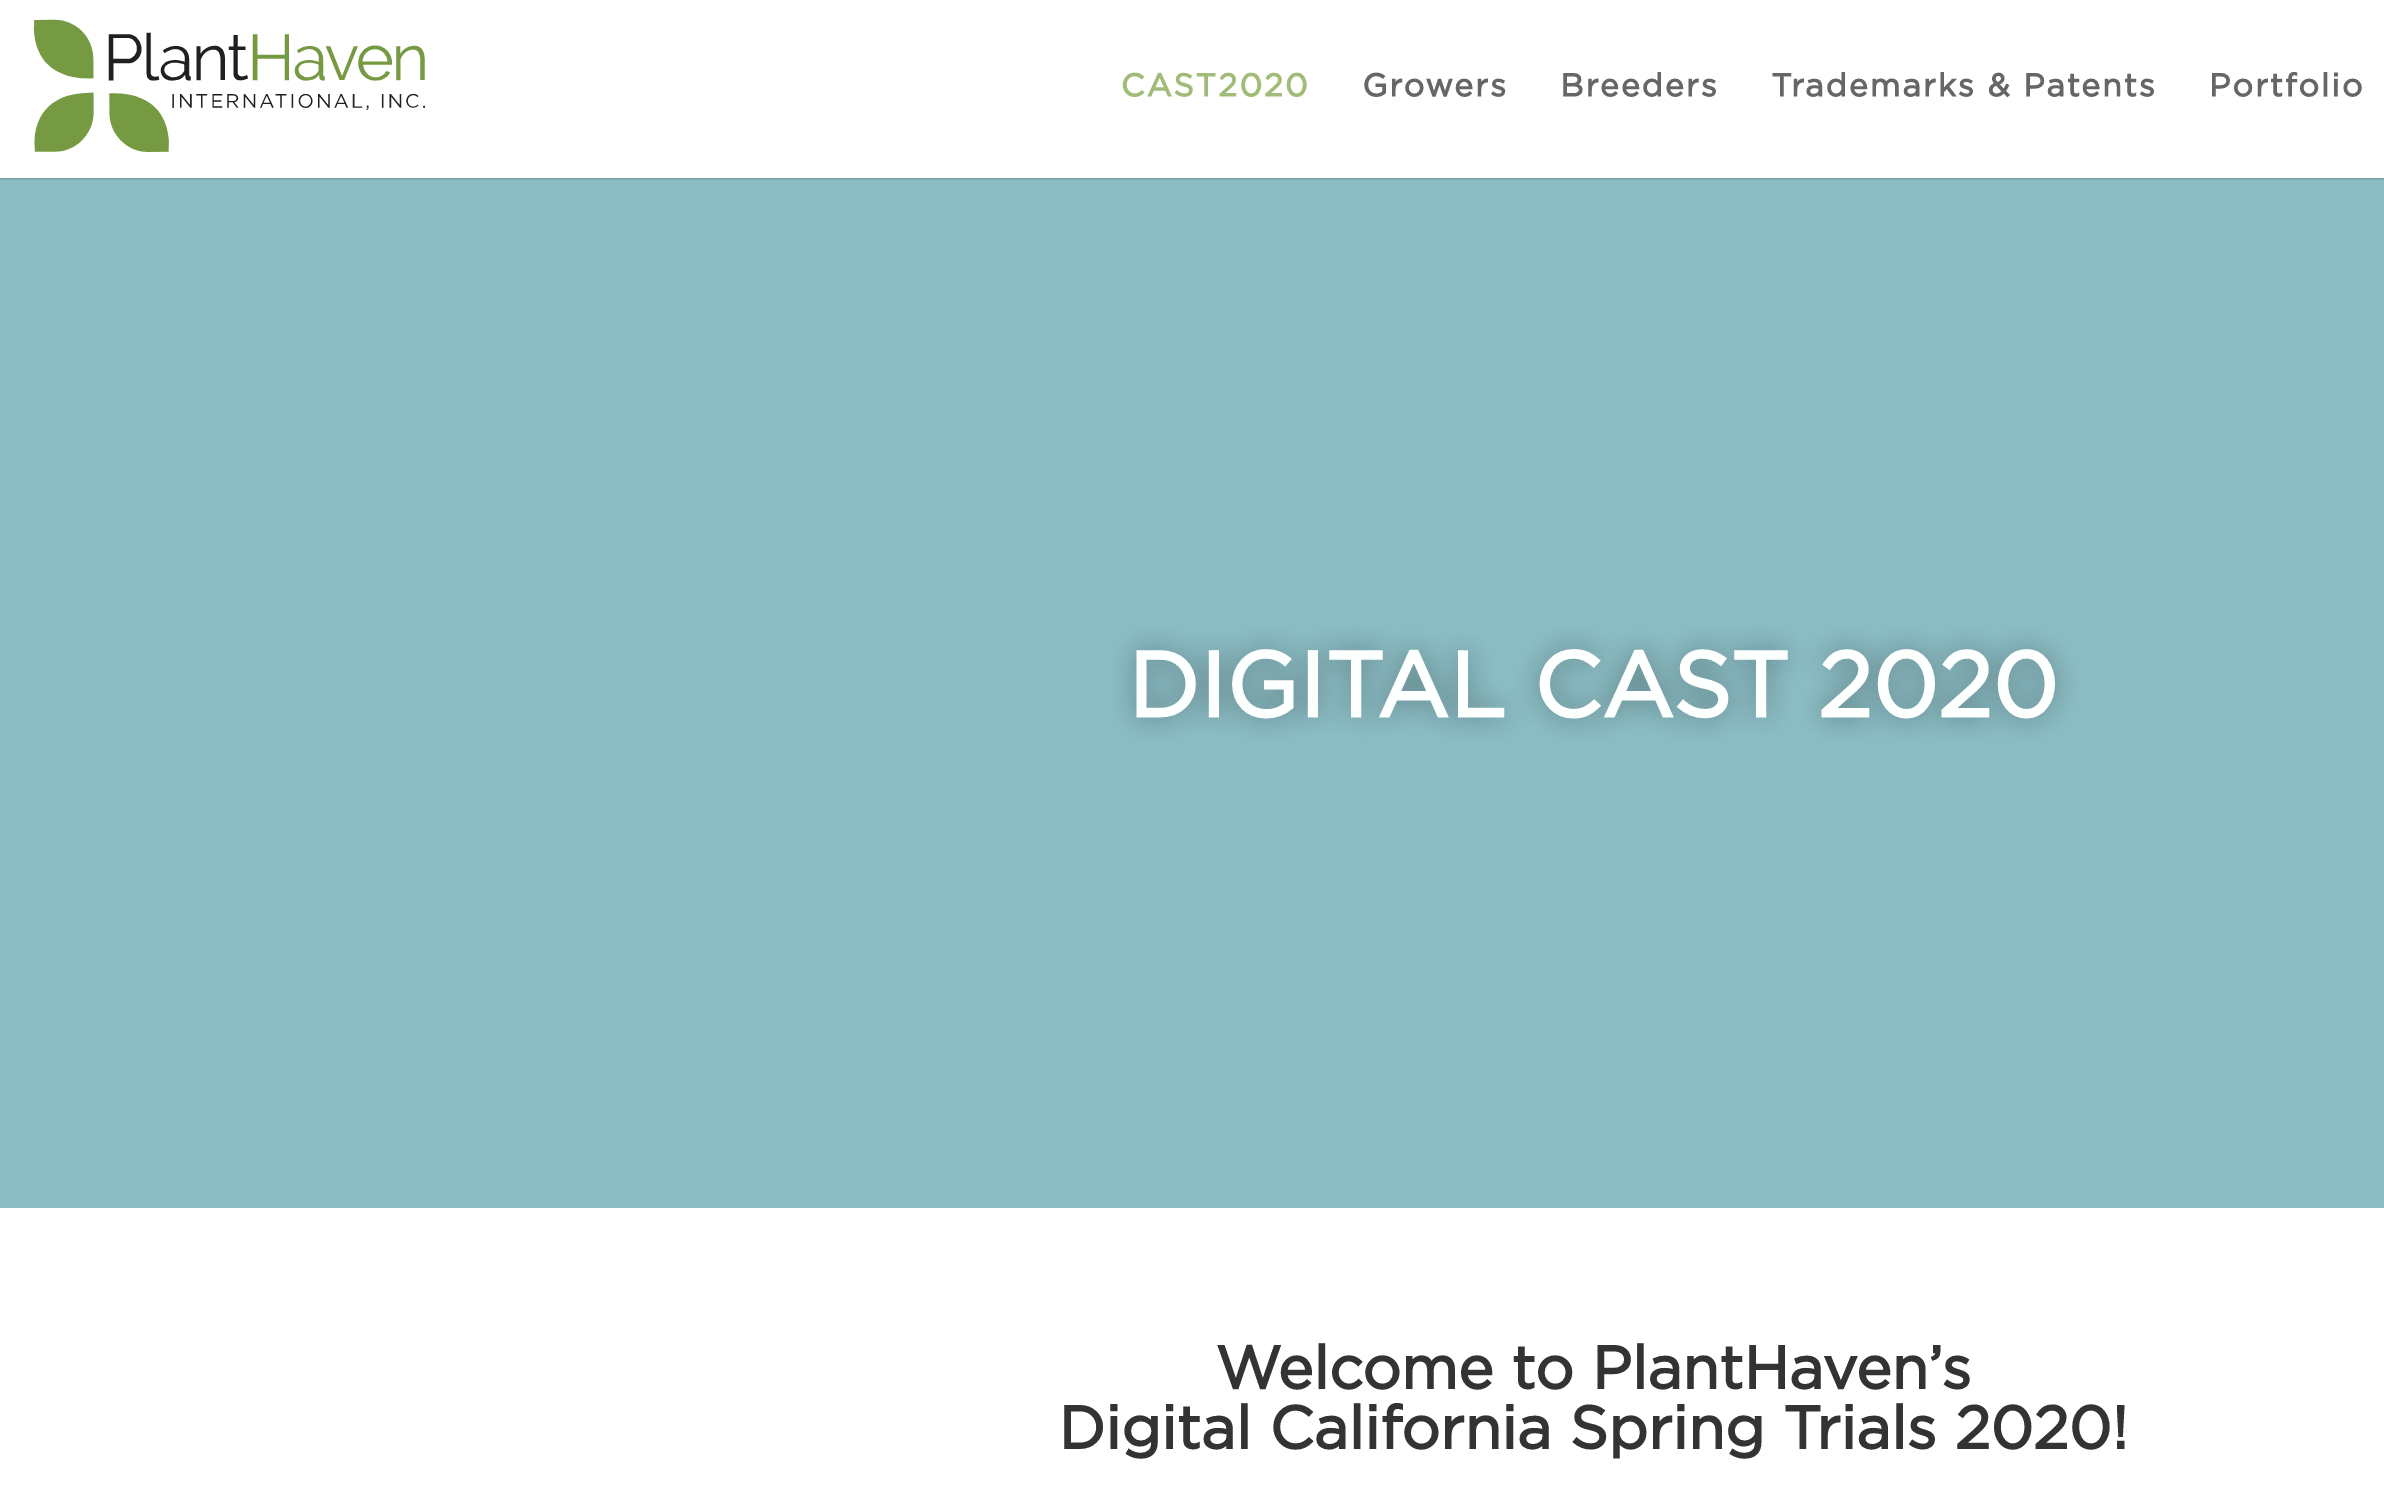 PlanHaven Digital Cast 2020